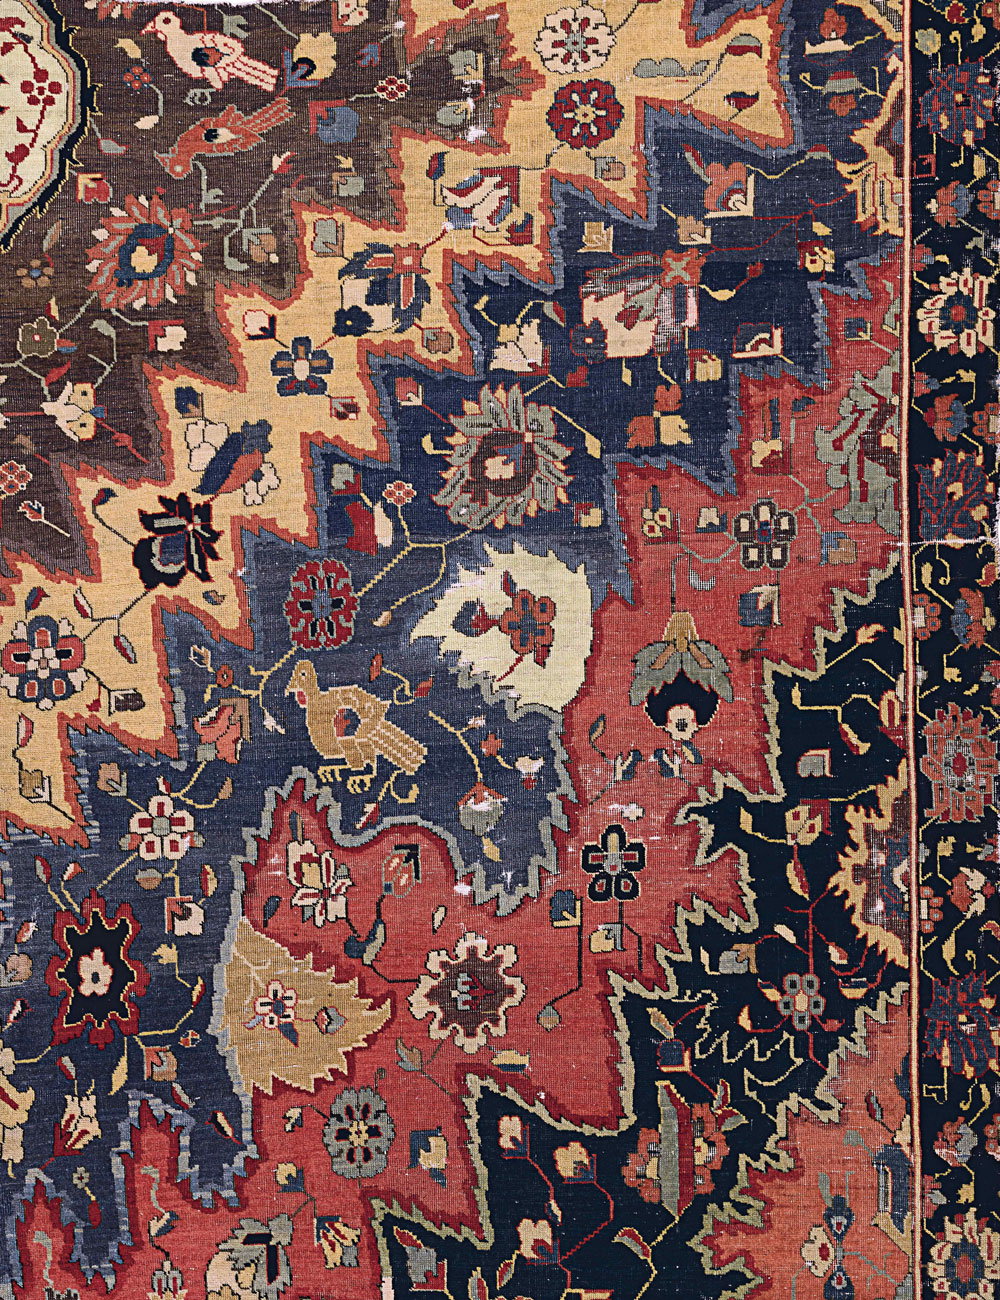 ‘Portuguese’ carpet fragment